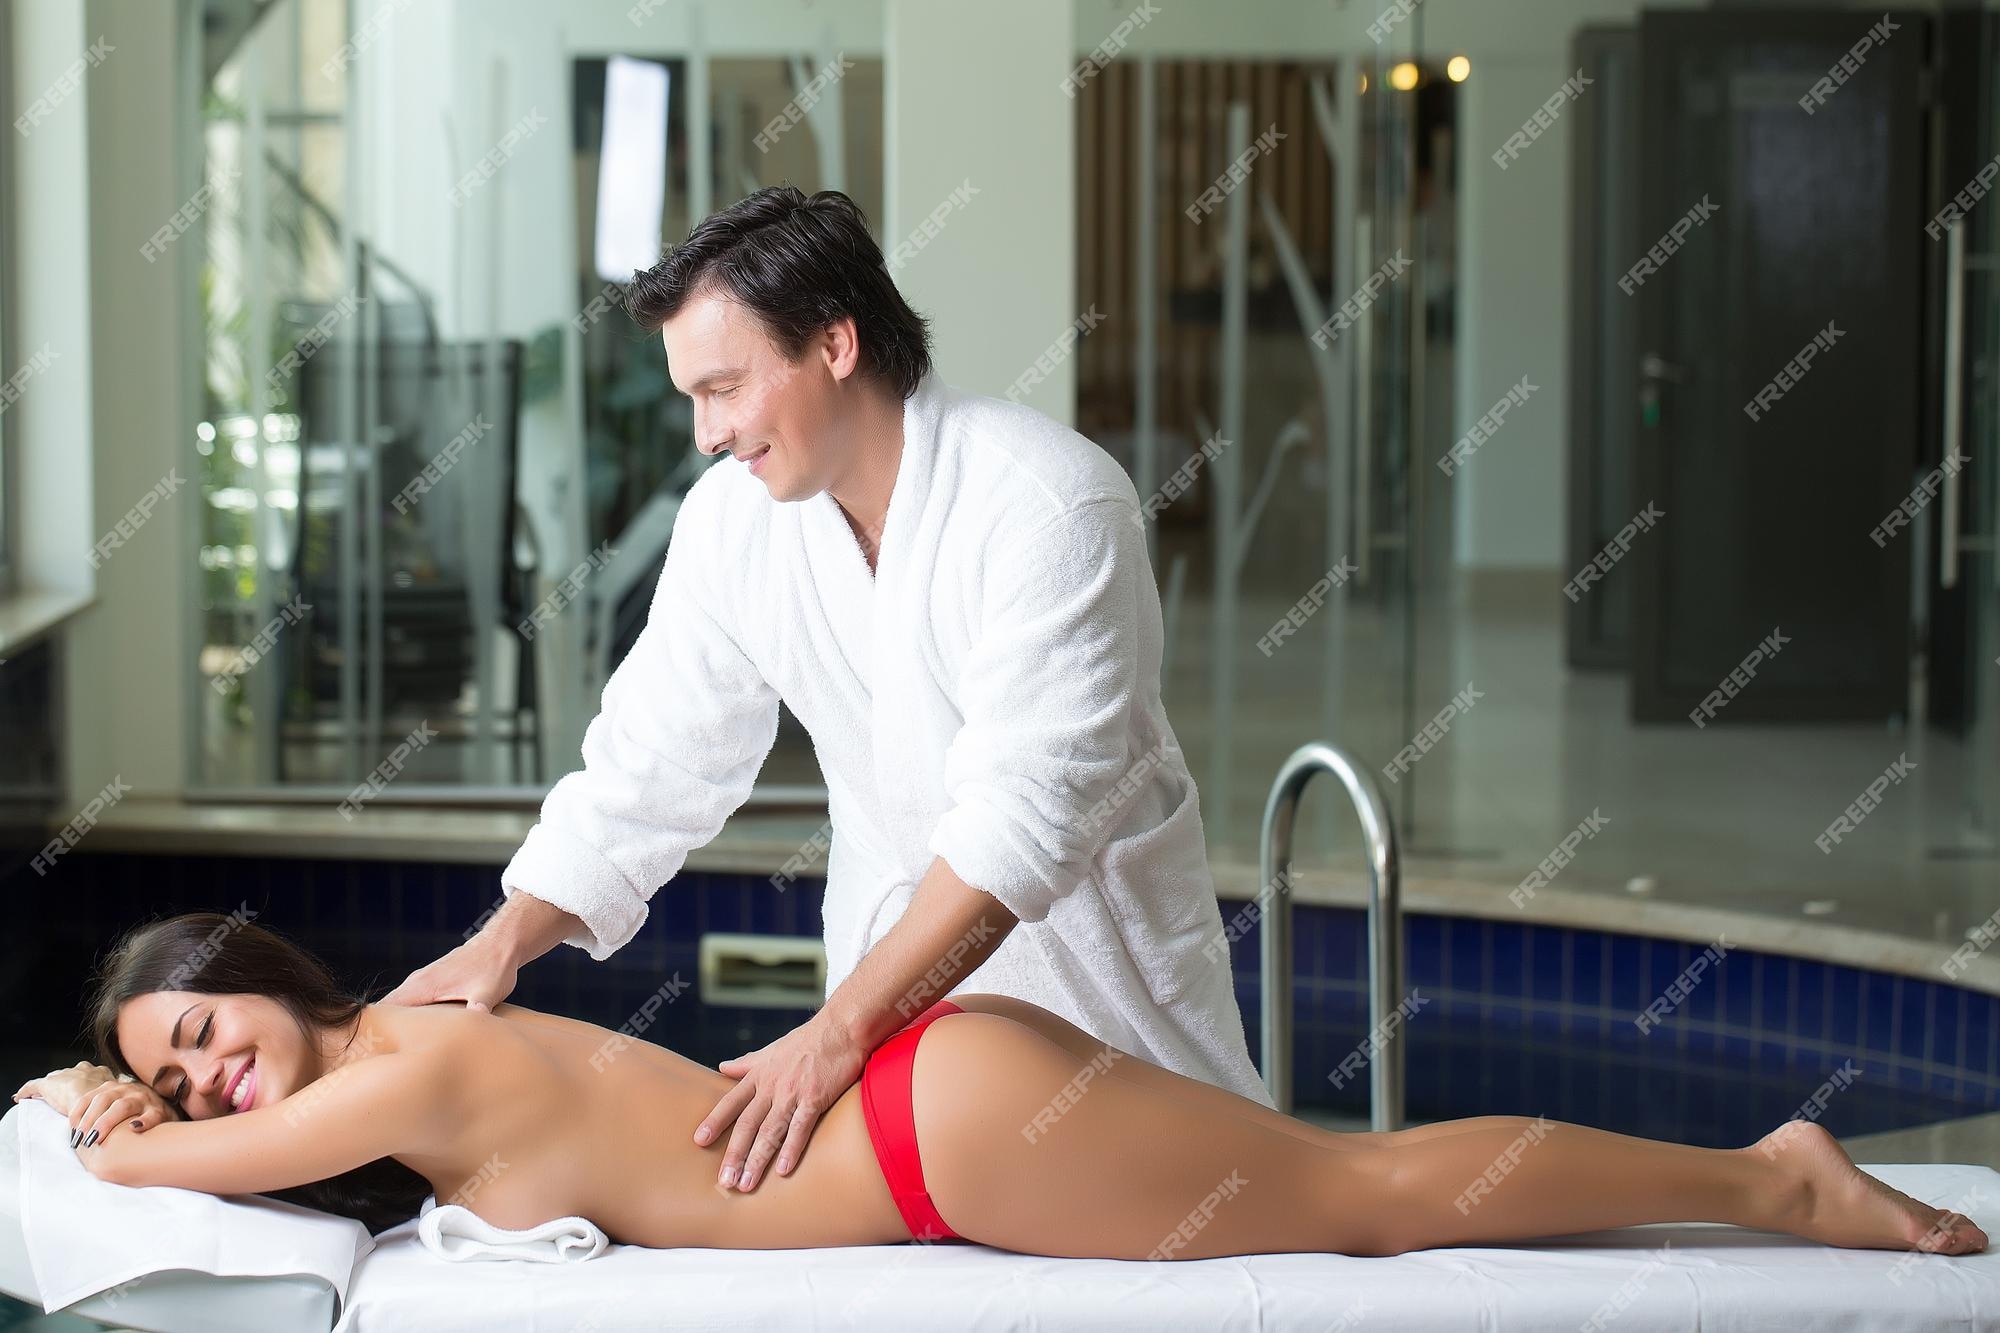 aida mueller share sensual massage therapy videos photos